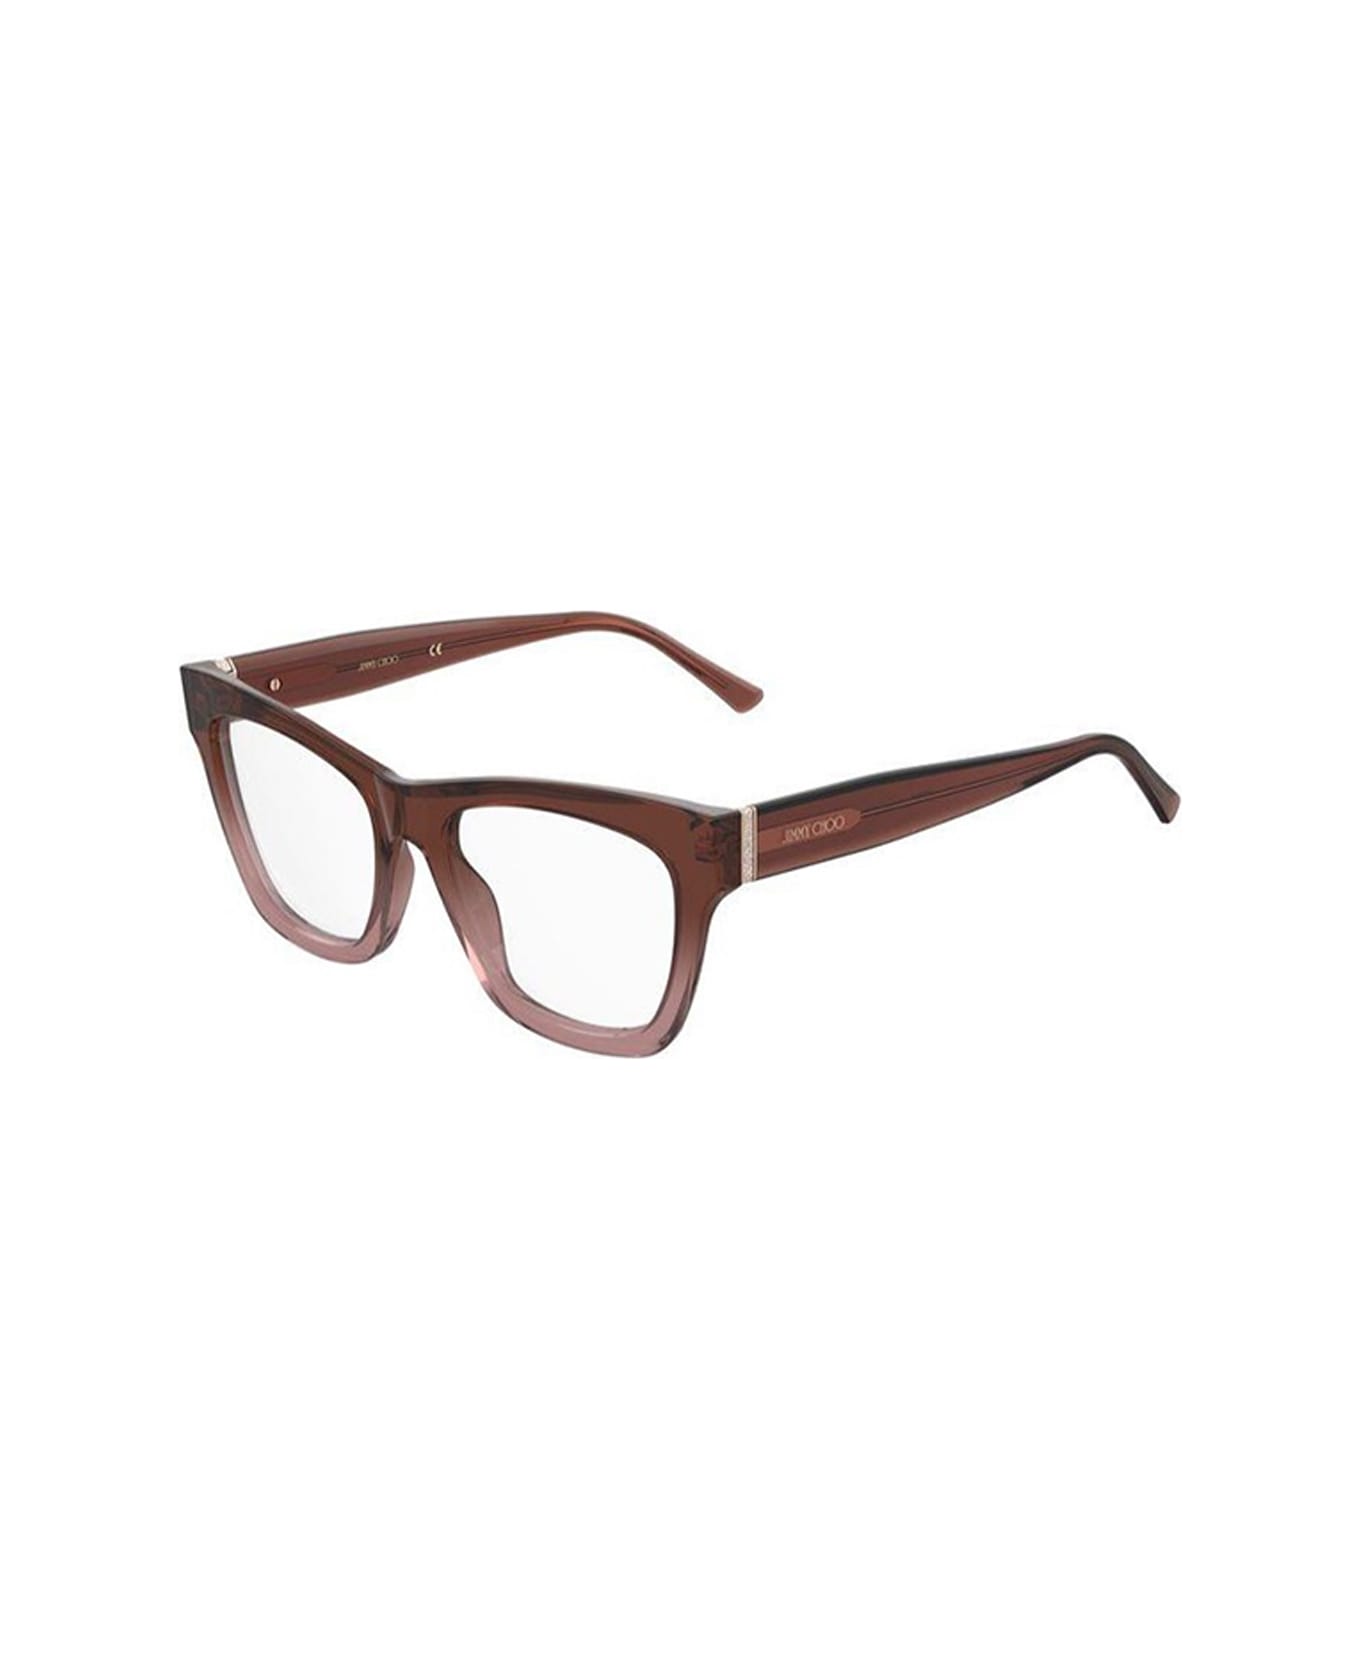 Jimmy Choo Eyewear Jc351 2ln/18 Glasses - Rosa